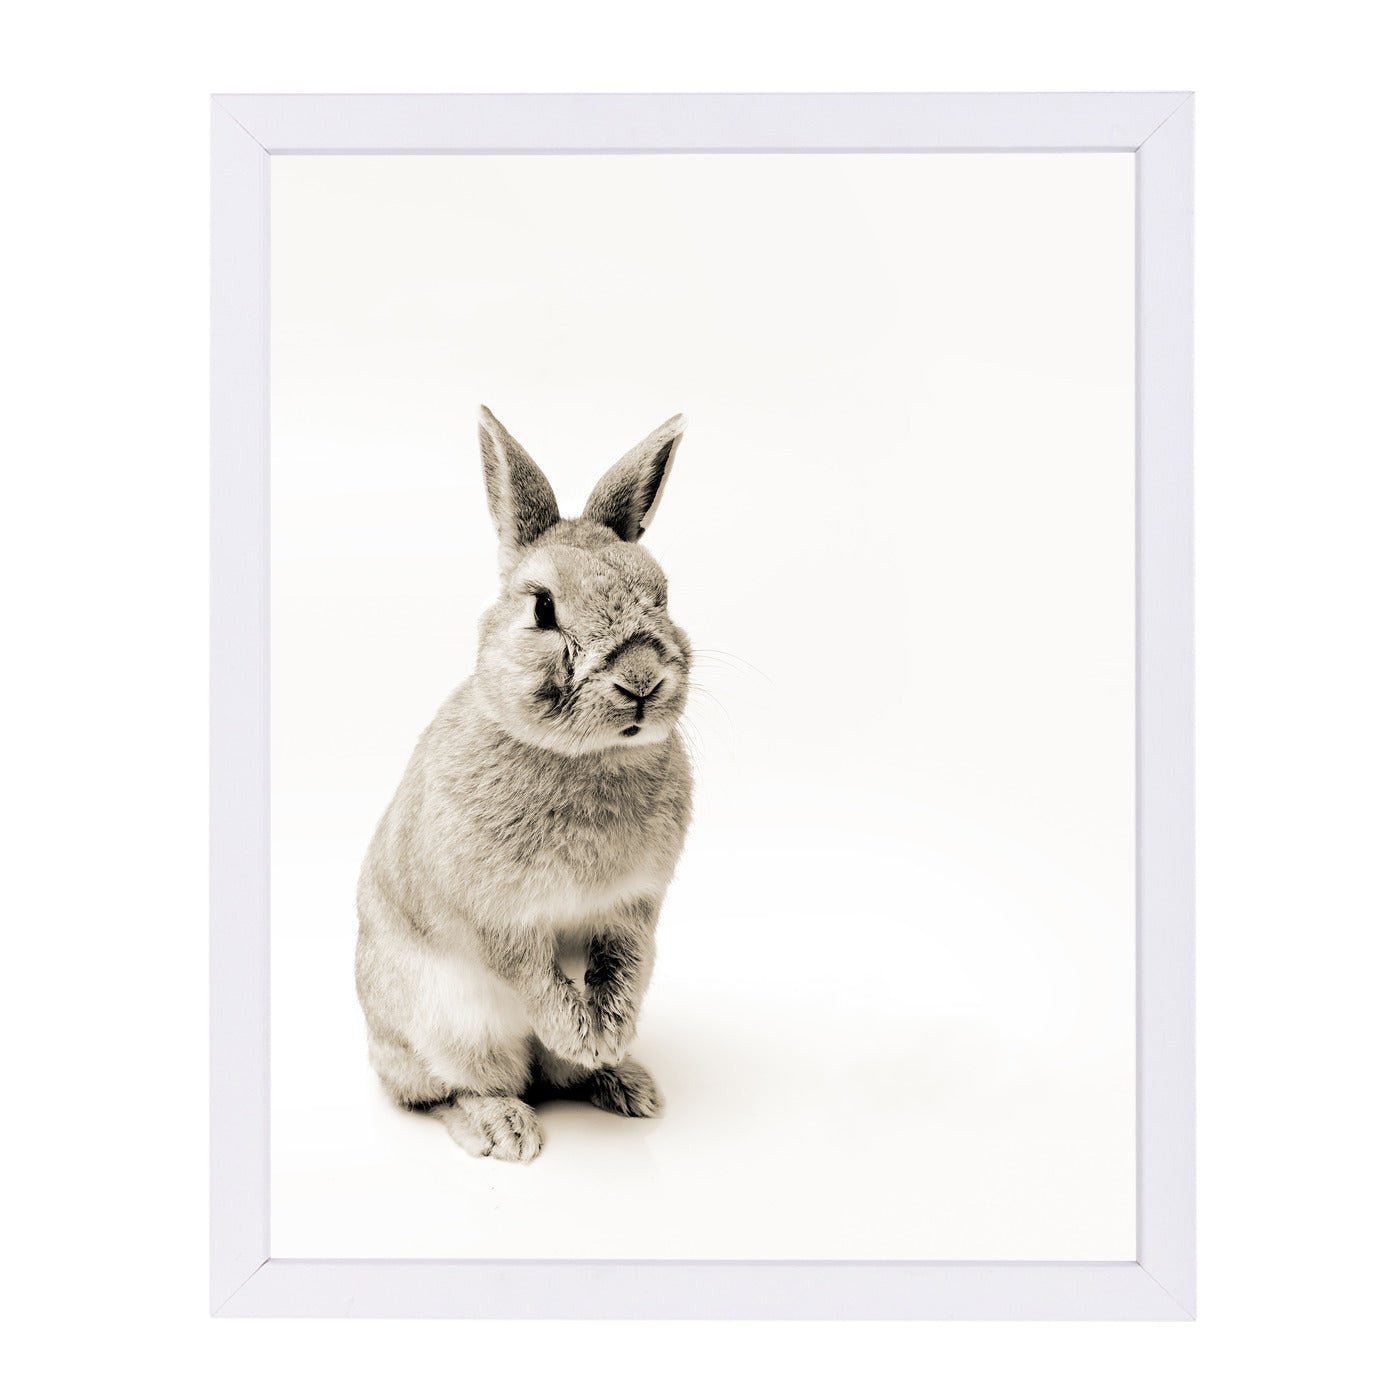 Cute Rabbit Photo By Wall + Wonder - White Framed Print - Wall Art - Americanflat